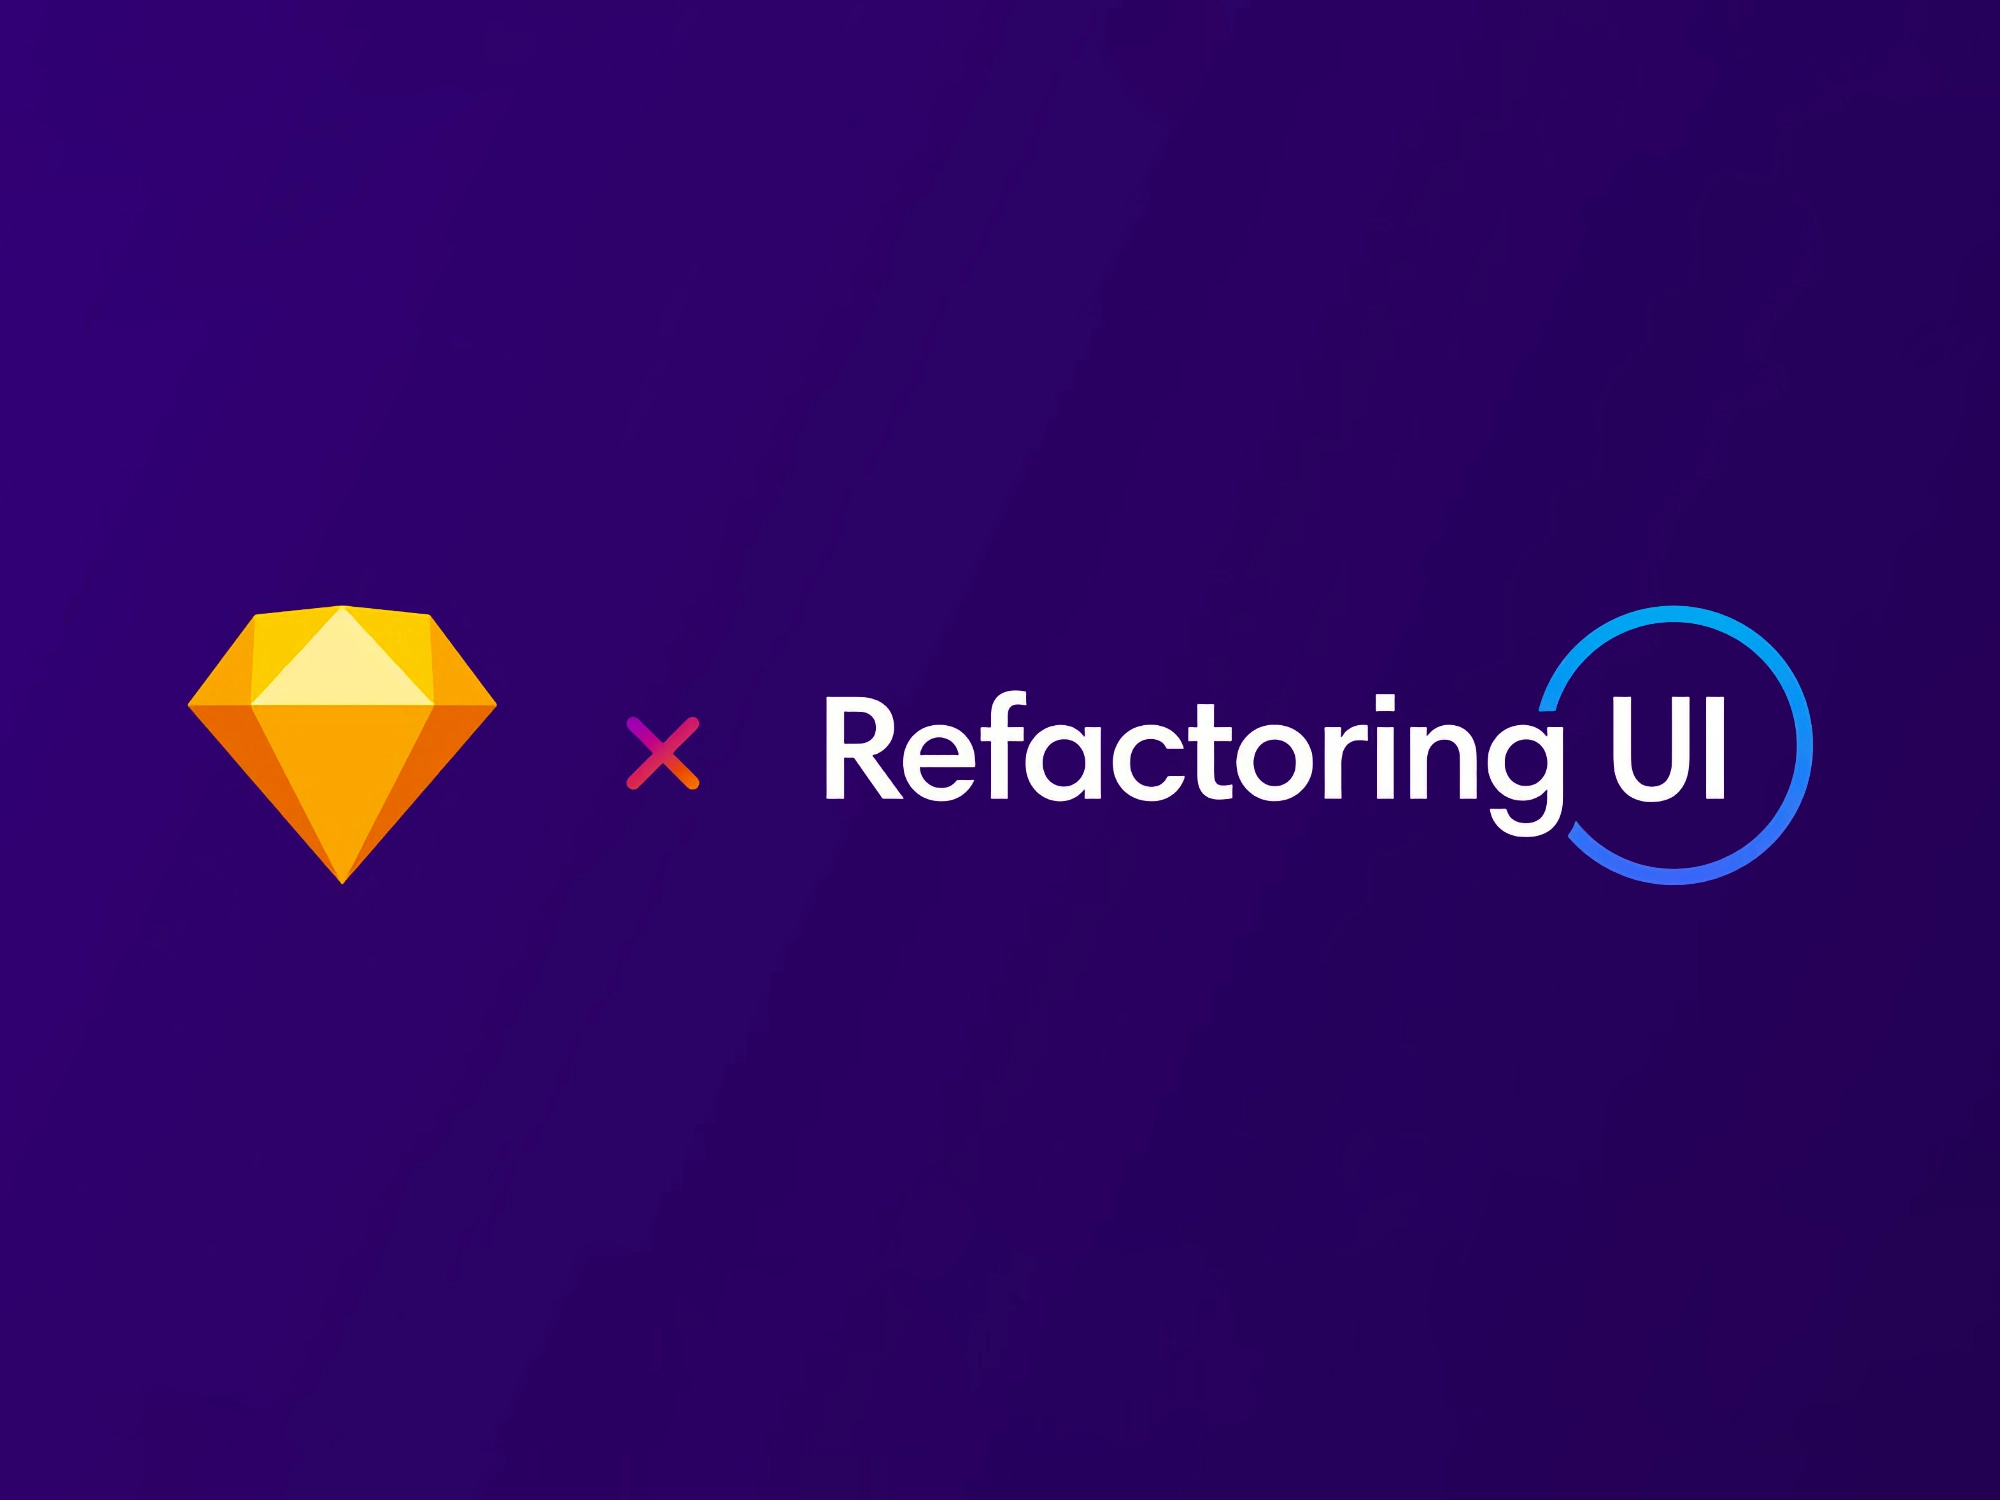 [VIP] Refactoring UI: Complete Package + Video